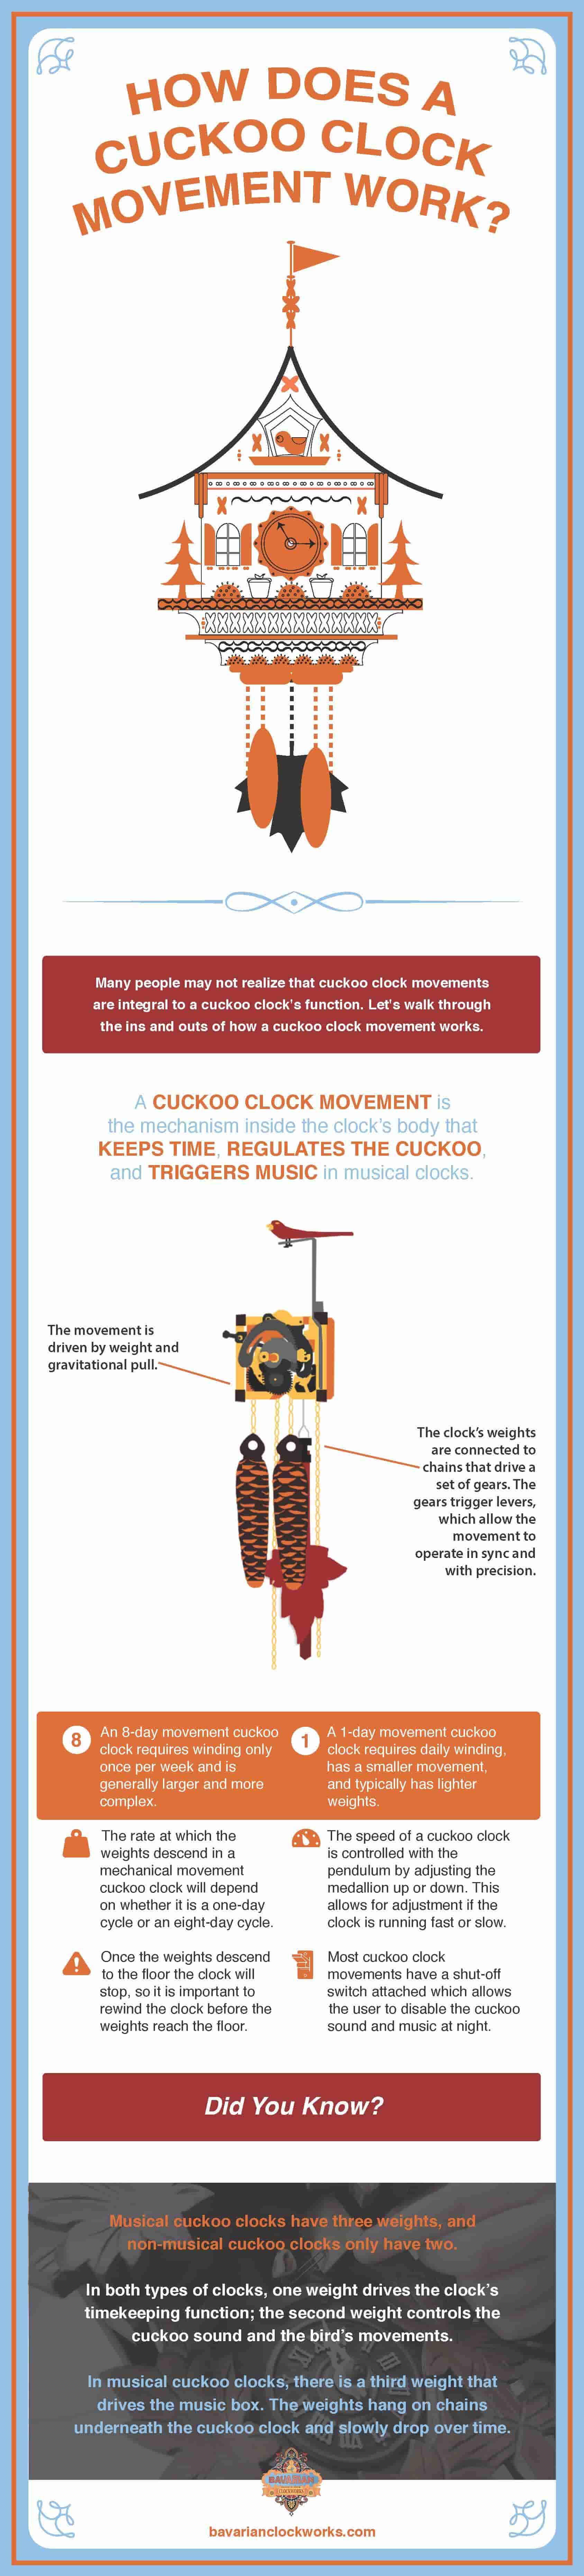 cuckoo-clock-infographic3.jpg